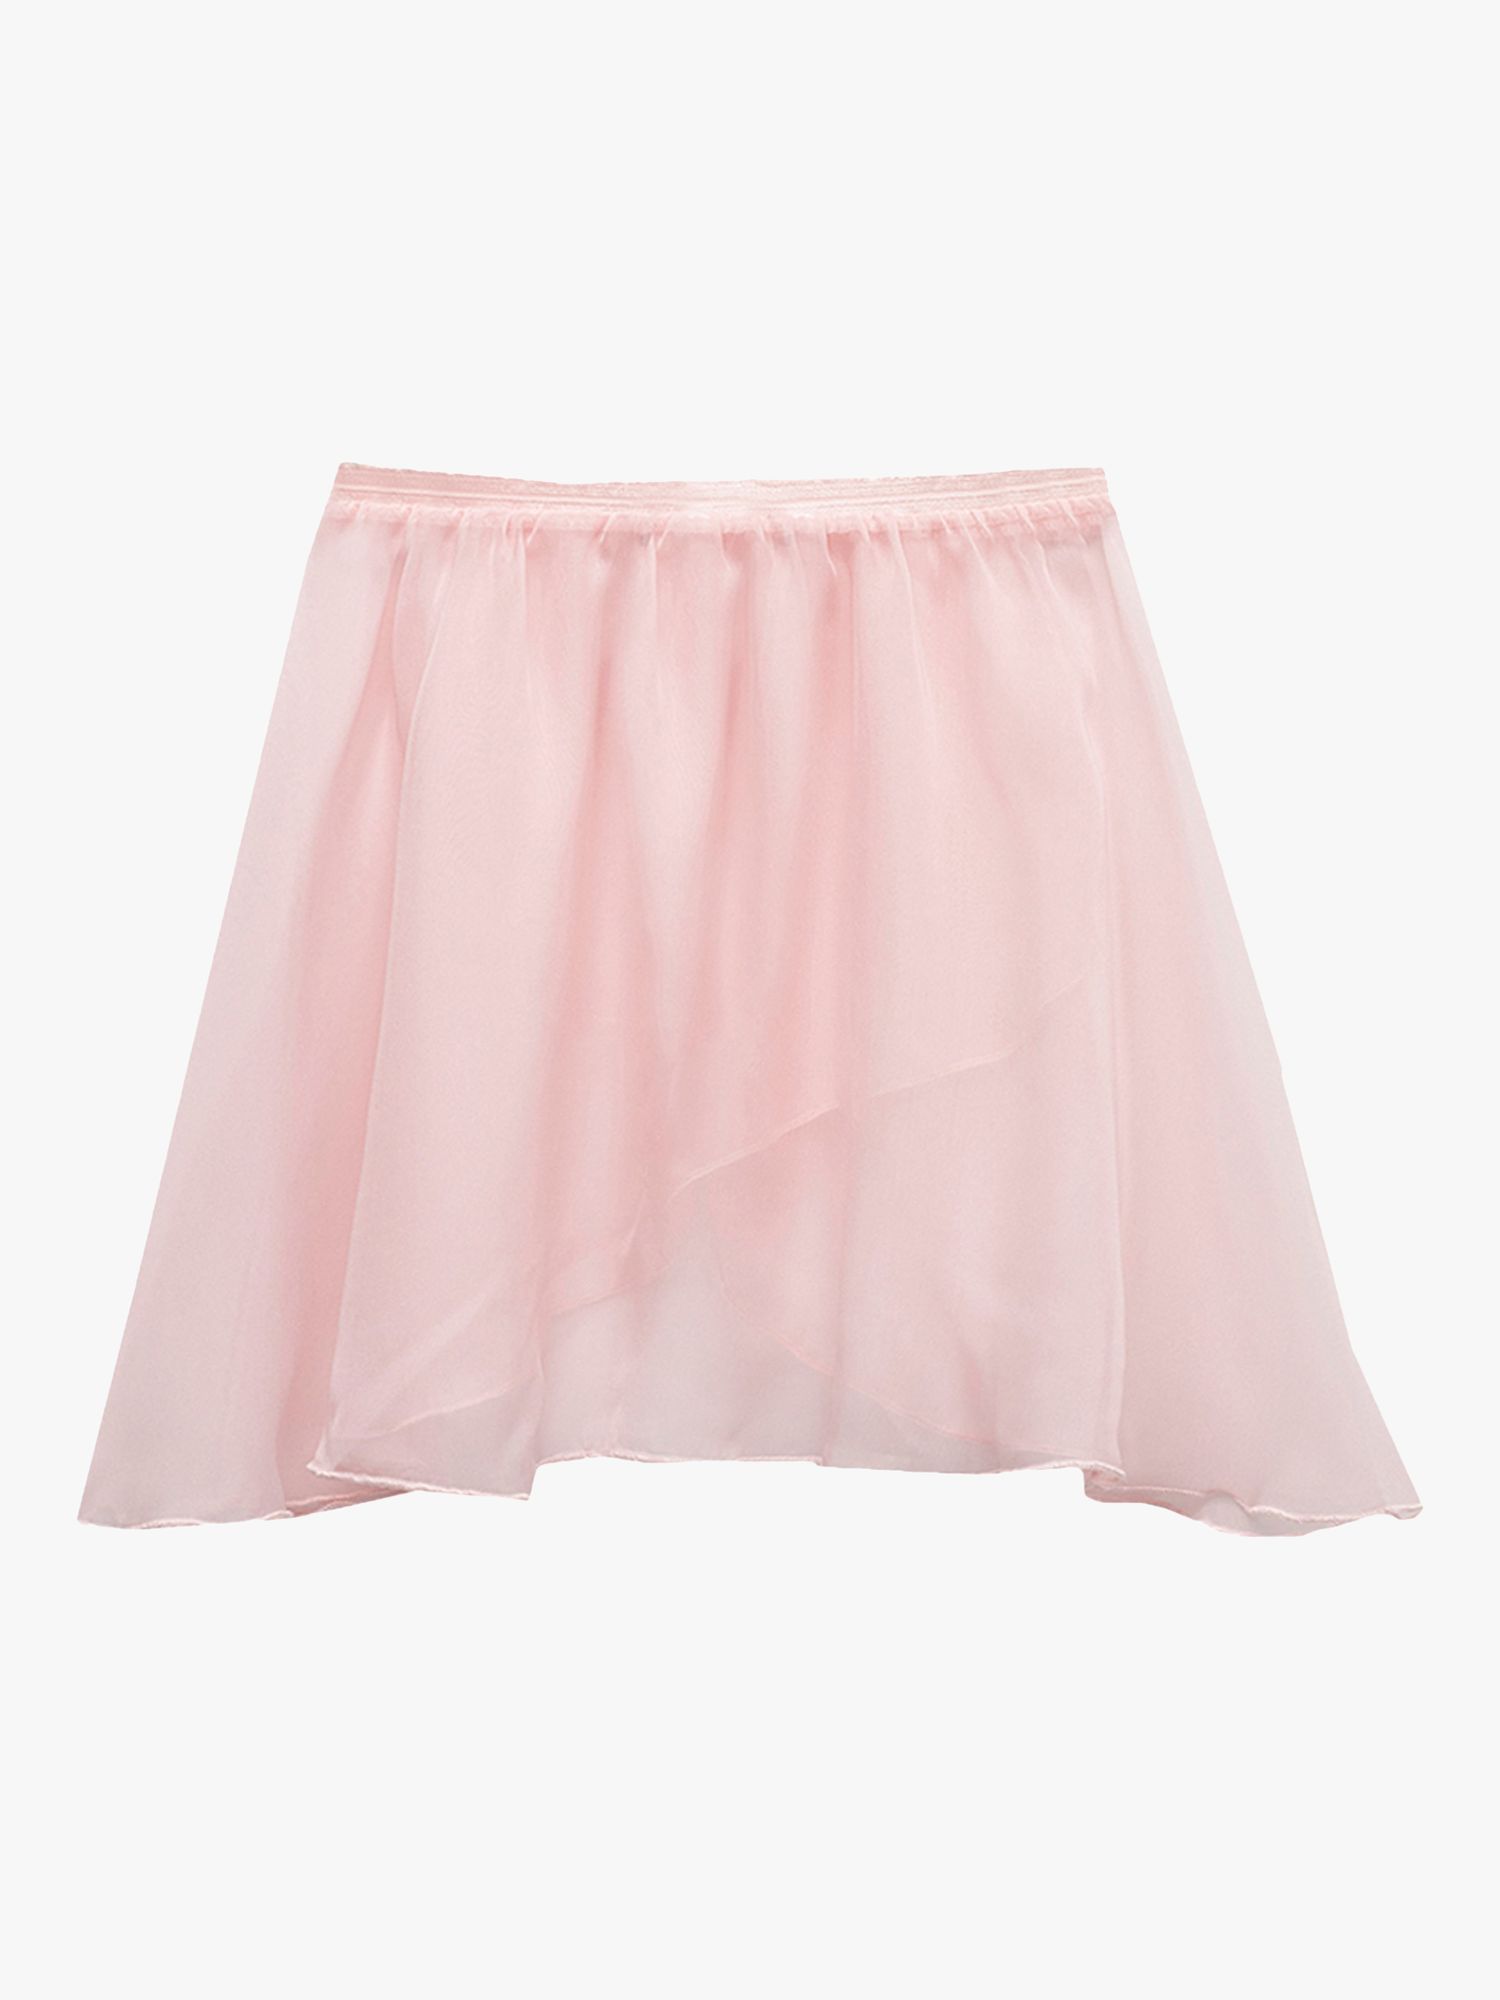 Buy Trotters Company Kids' Ballet Skirt, Pink Online at johnlewis.com